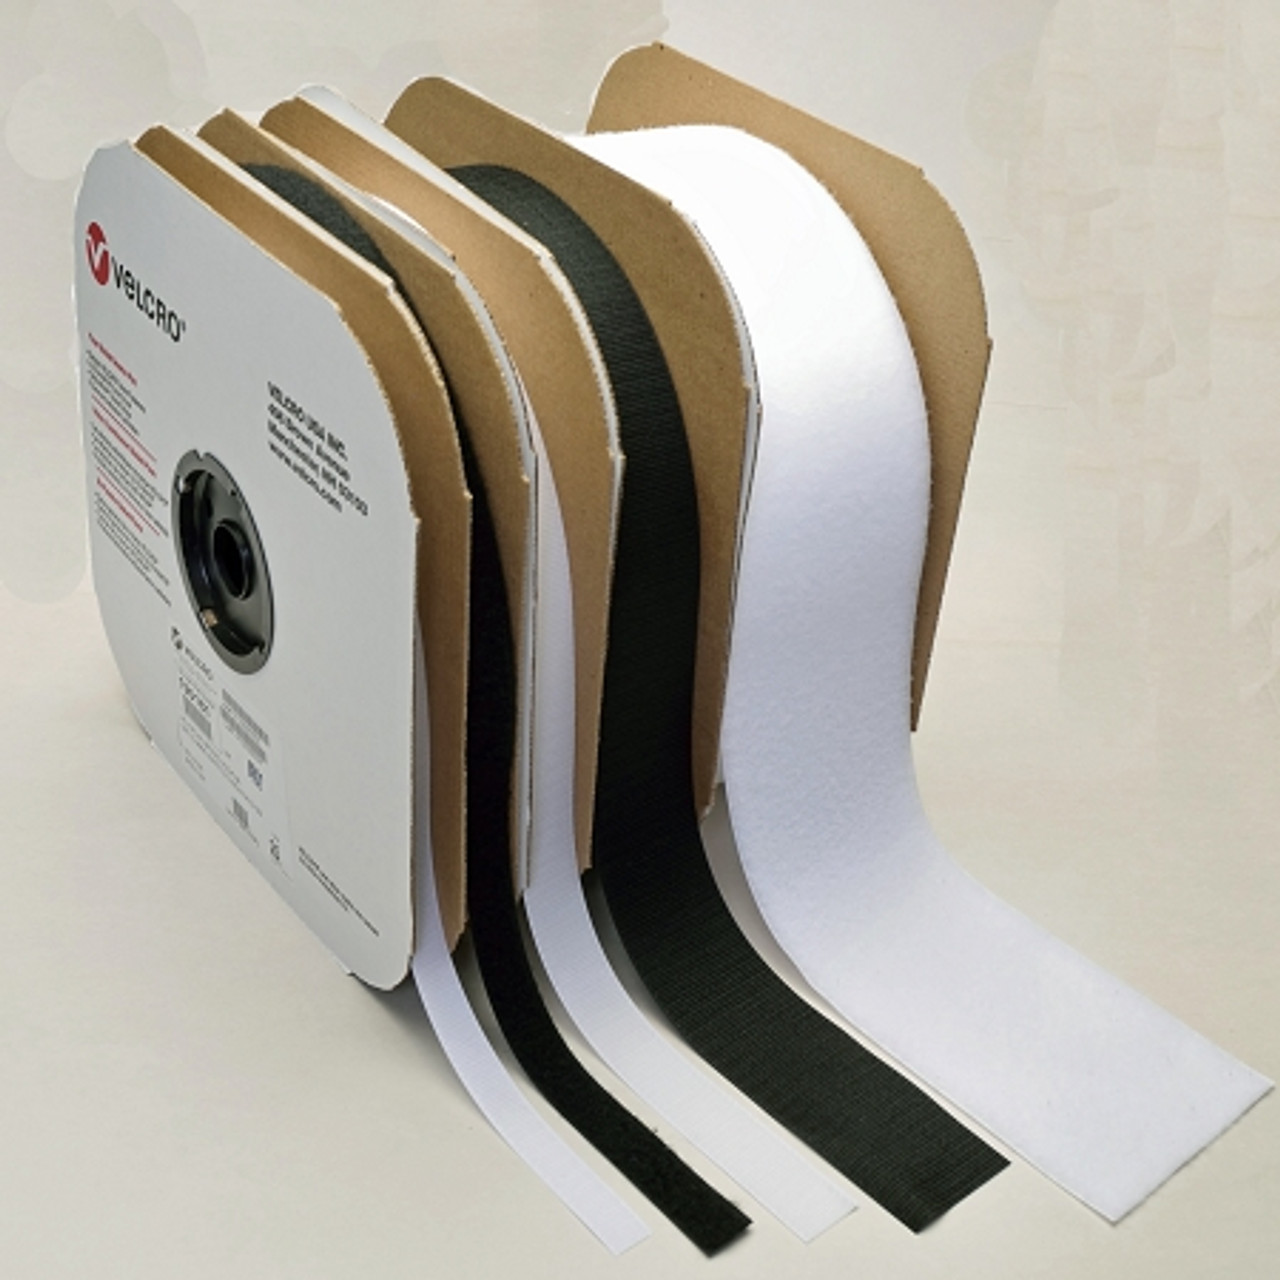 Sew-On VELCRO Brand Tape Straps 3/4" 1" White Black Hook Loop 